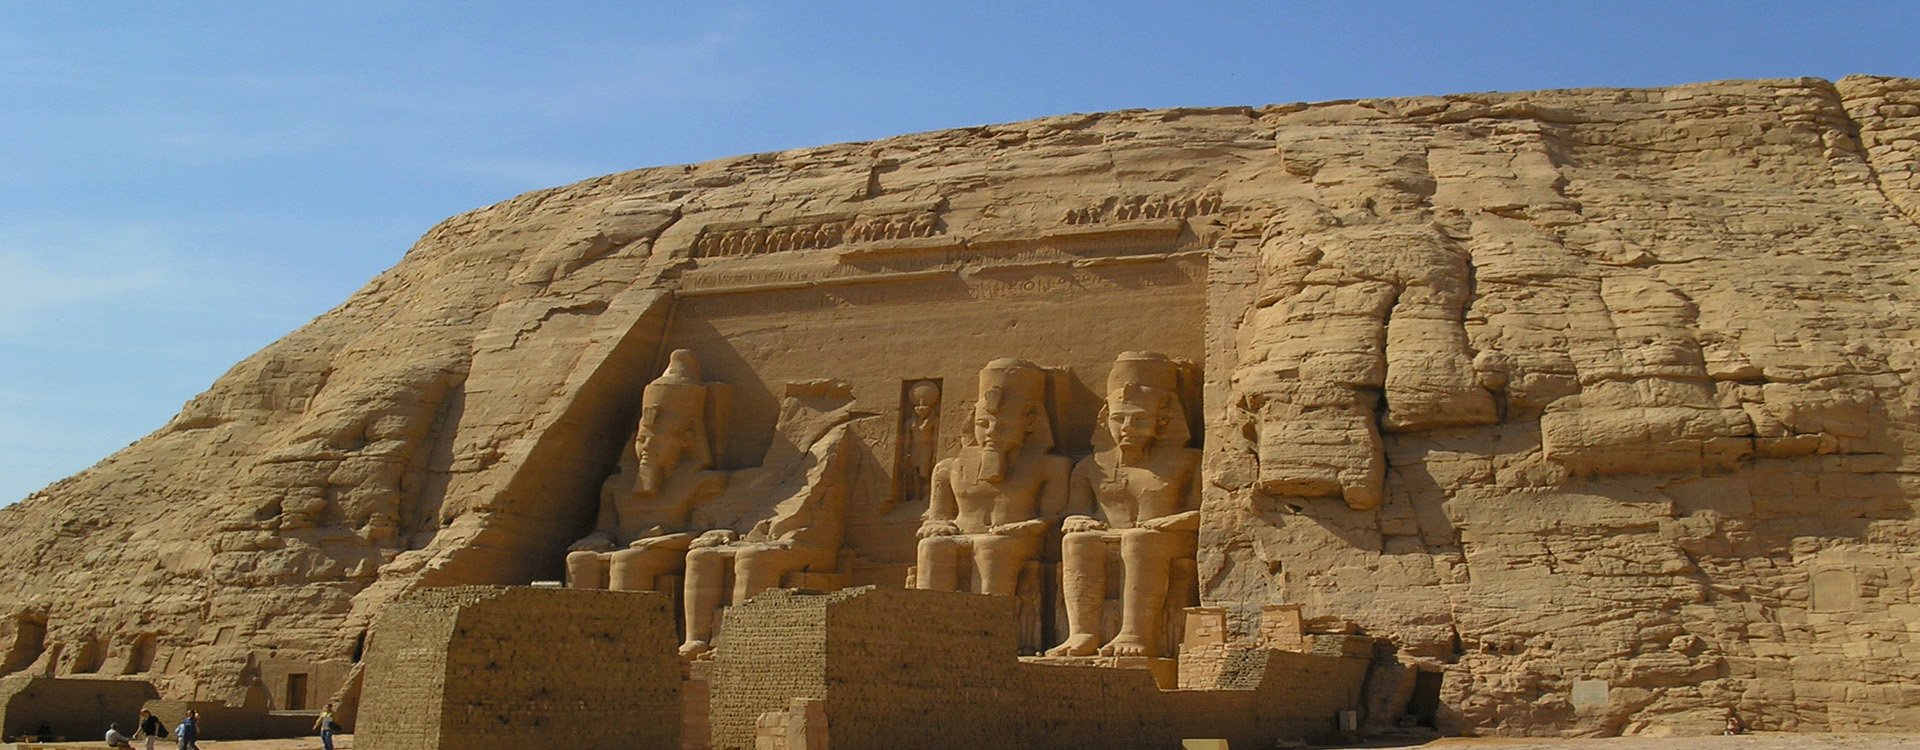 Egypt_Abu Simbel